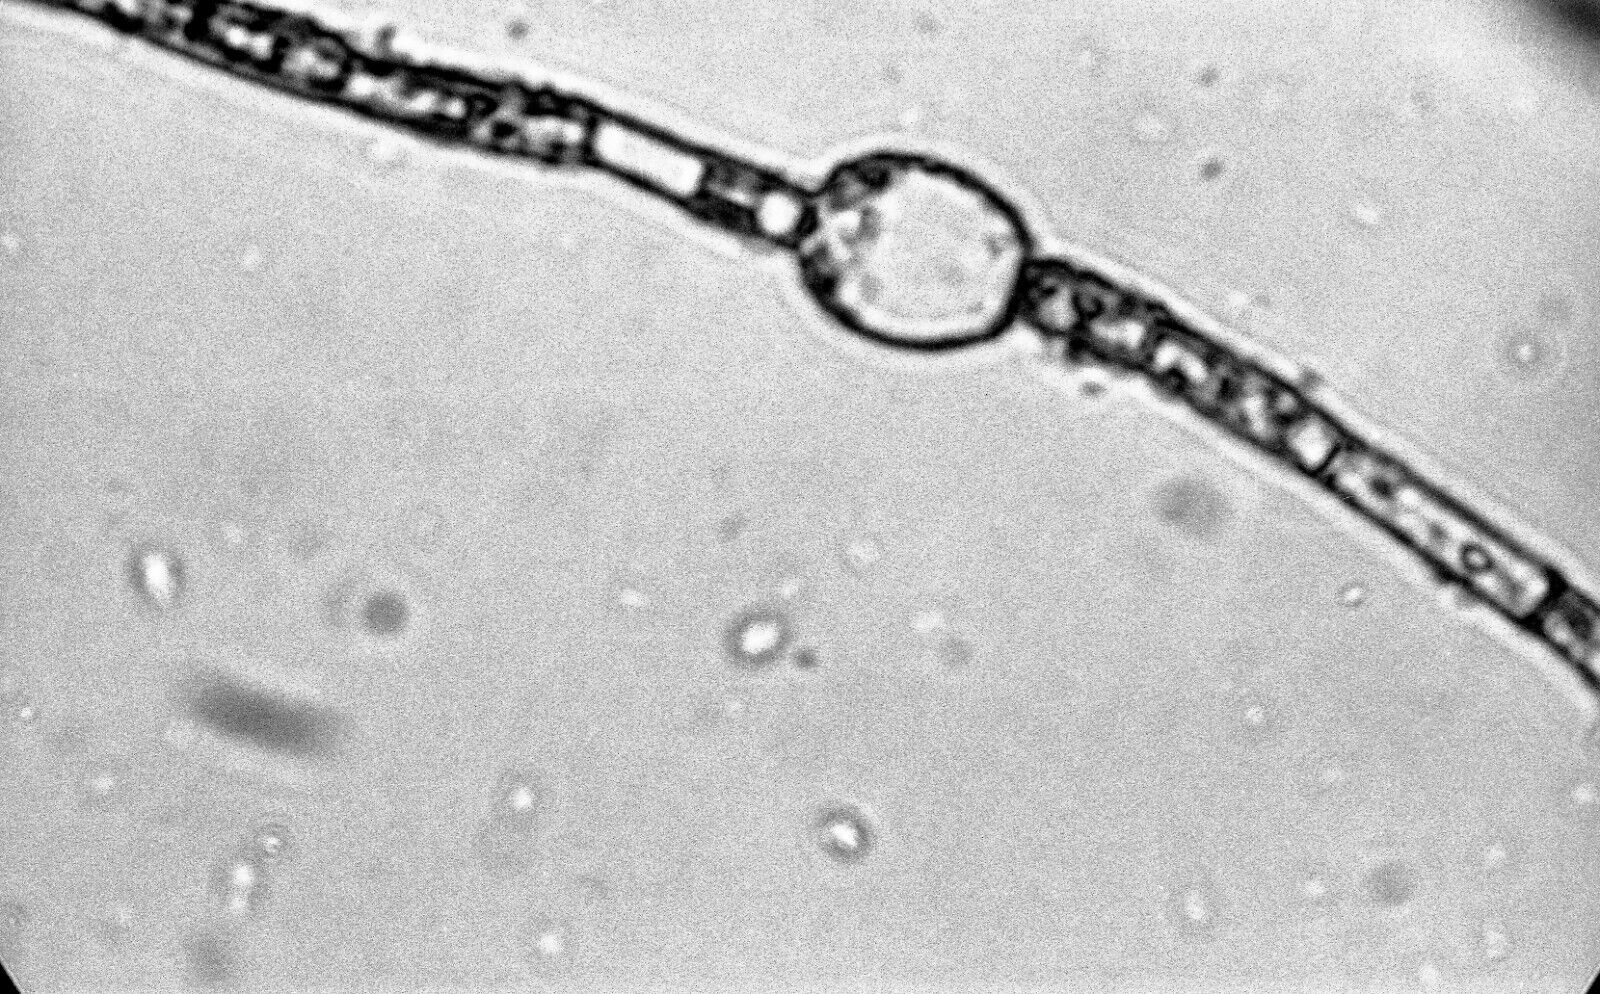 Aquatic Microbes Cyanobacteria Ten Original 35 mm Black & White Negatives of